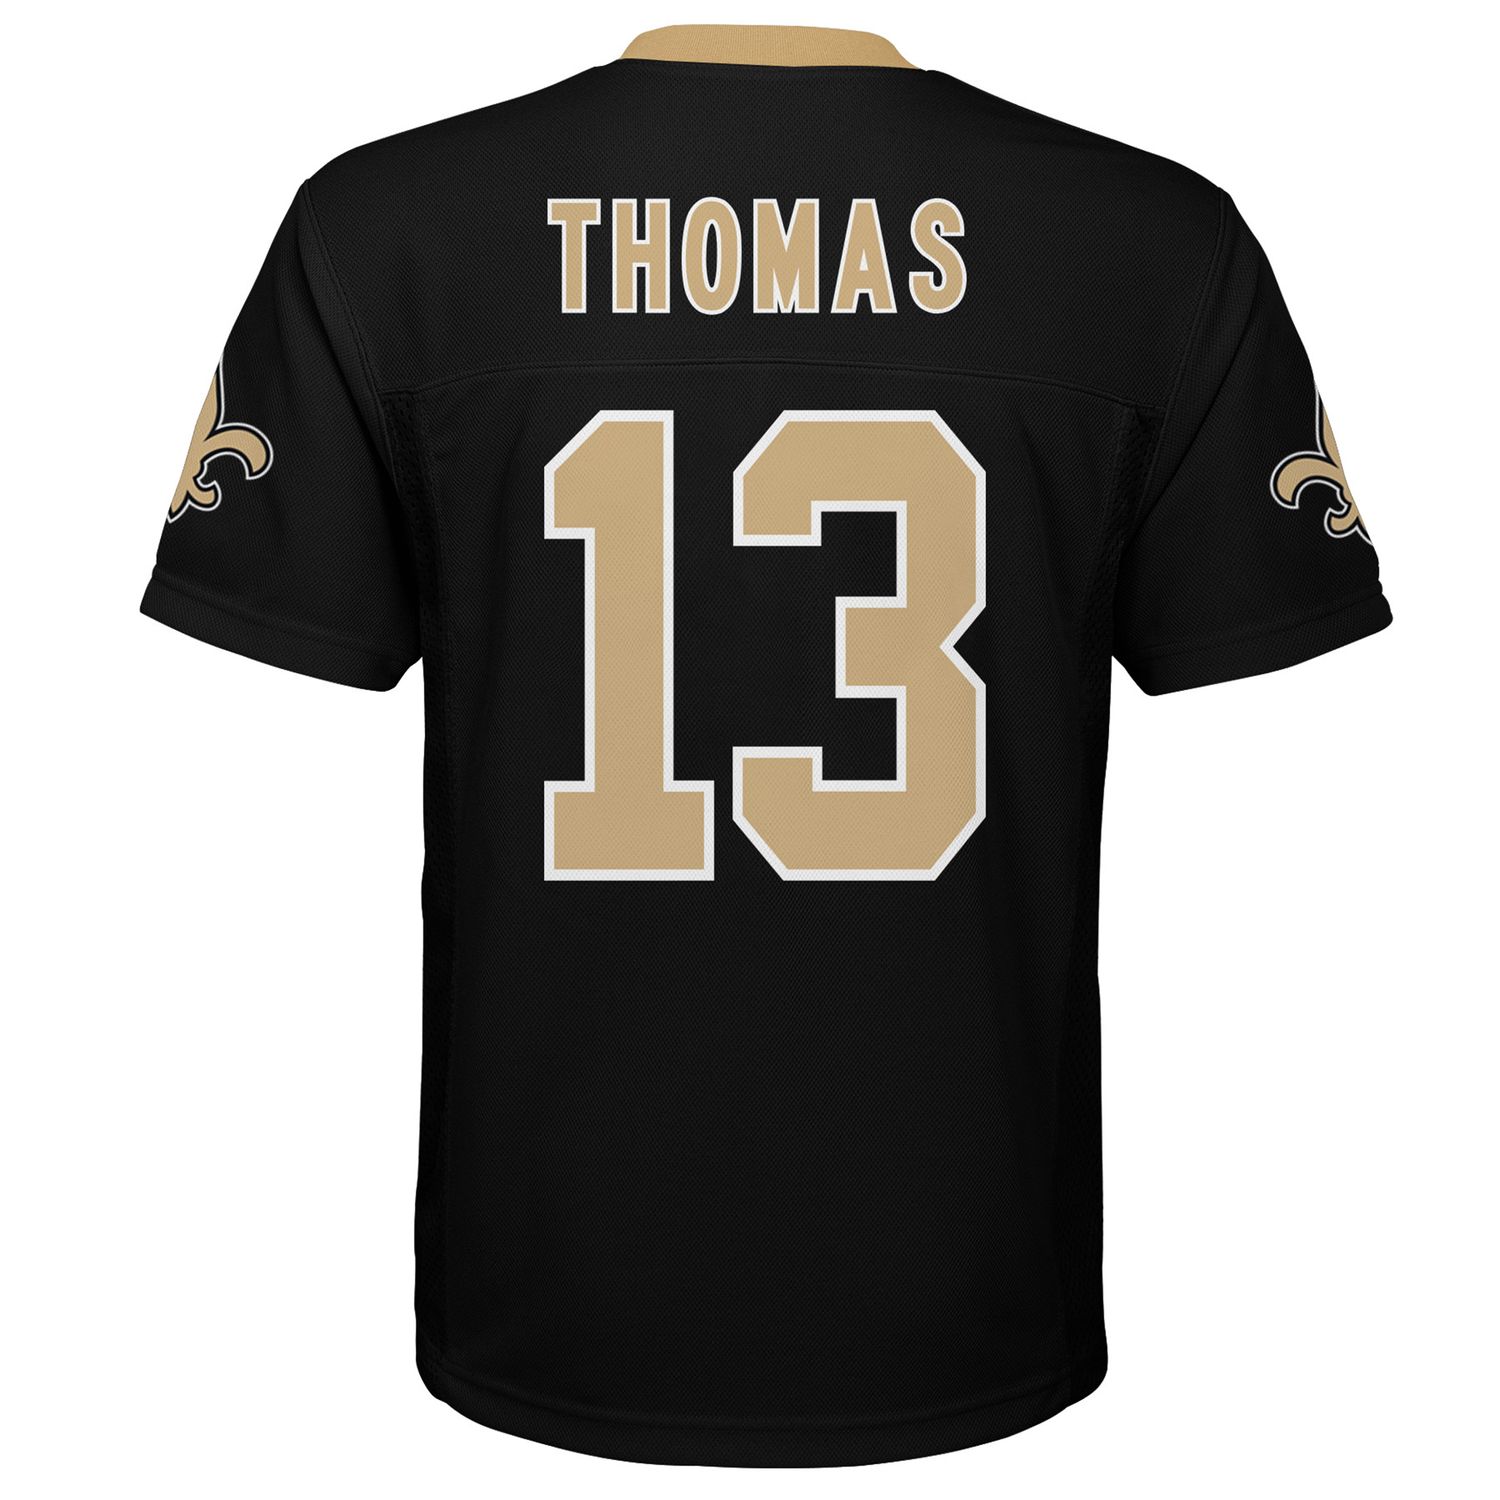 thomas saints jersey